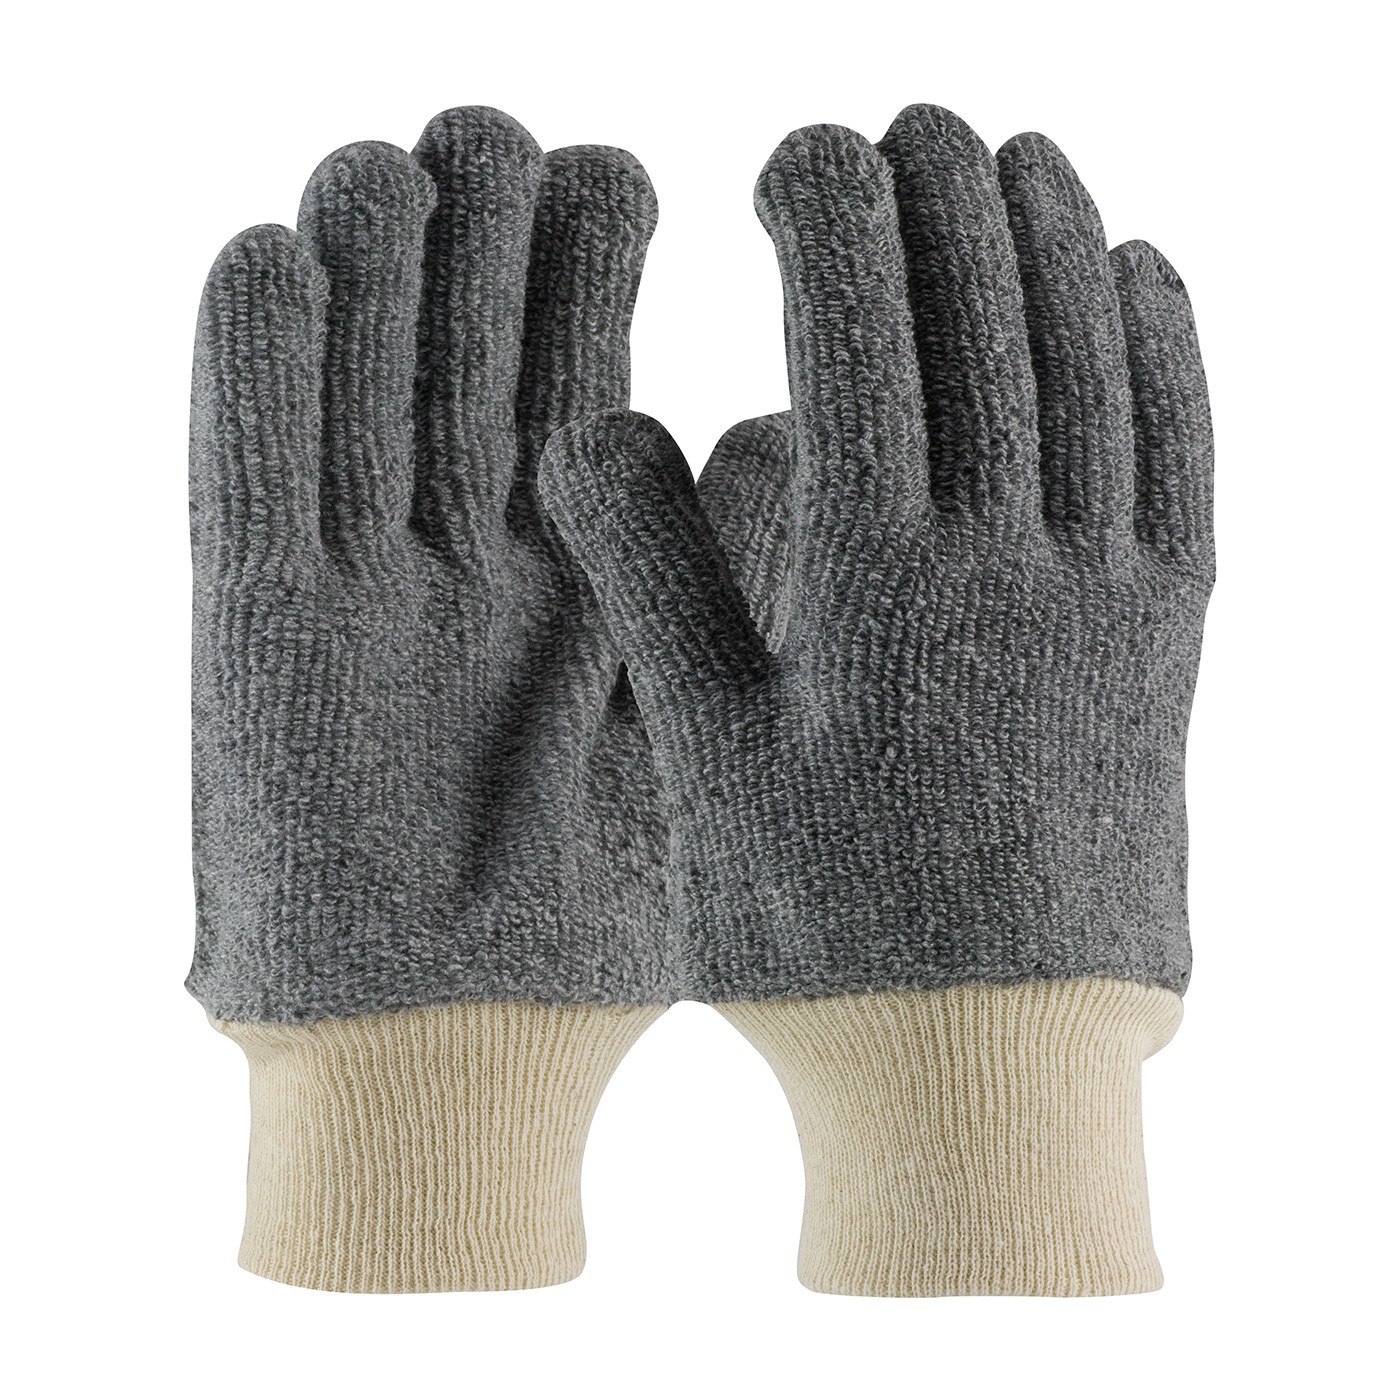 PIP® Terry Cloth Seamless Knit Glove - 24 oz  (#42-C750)